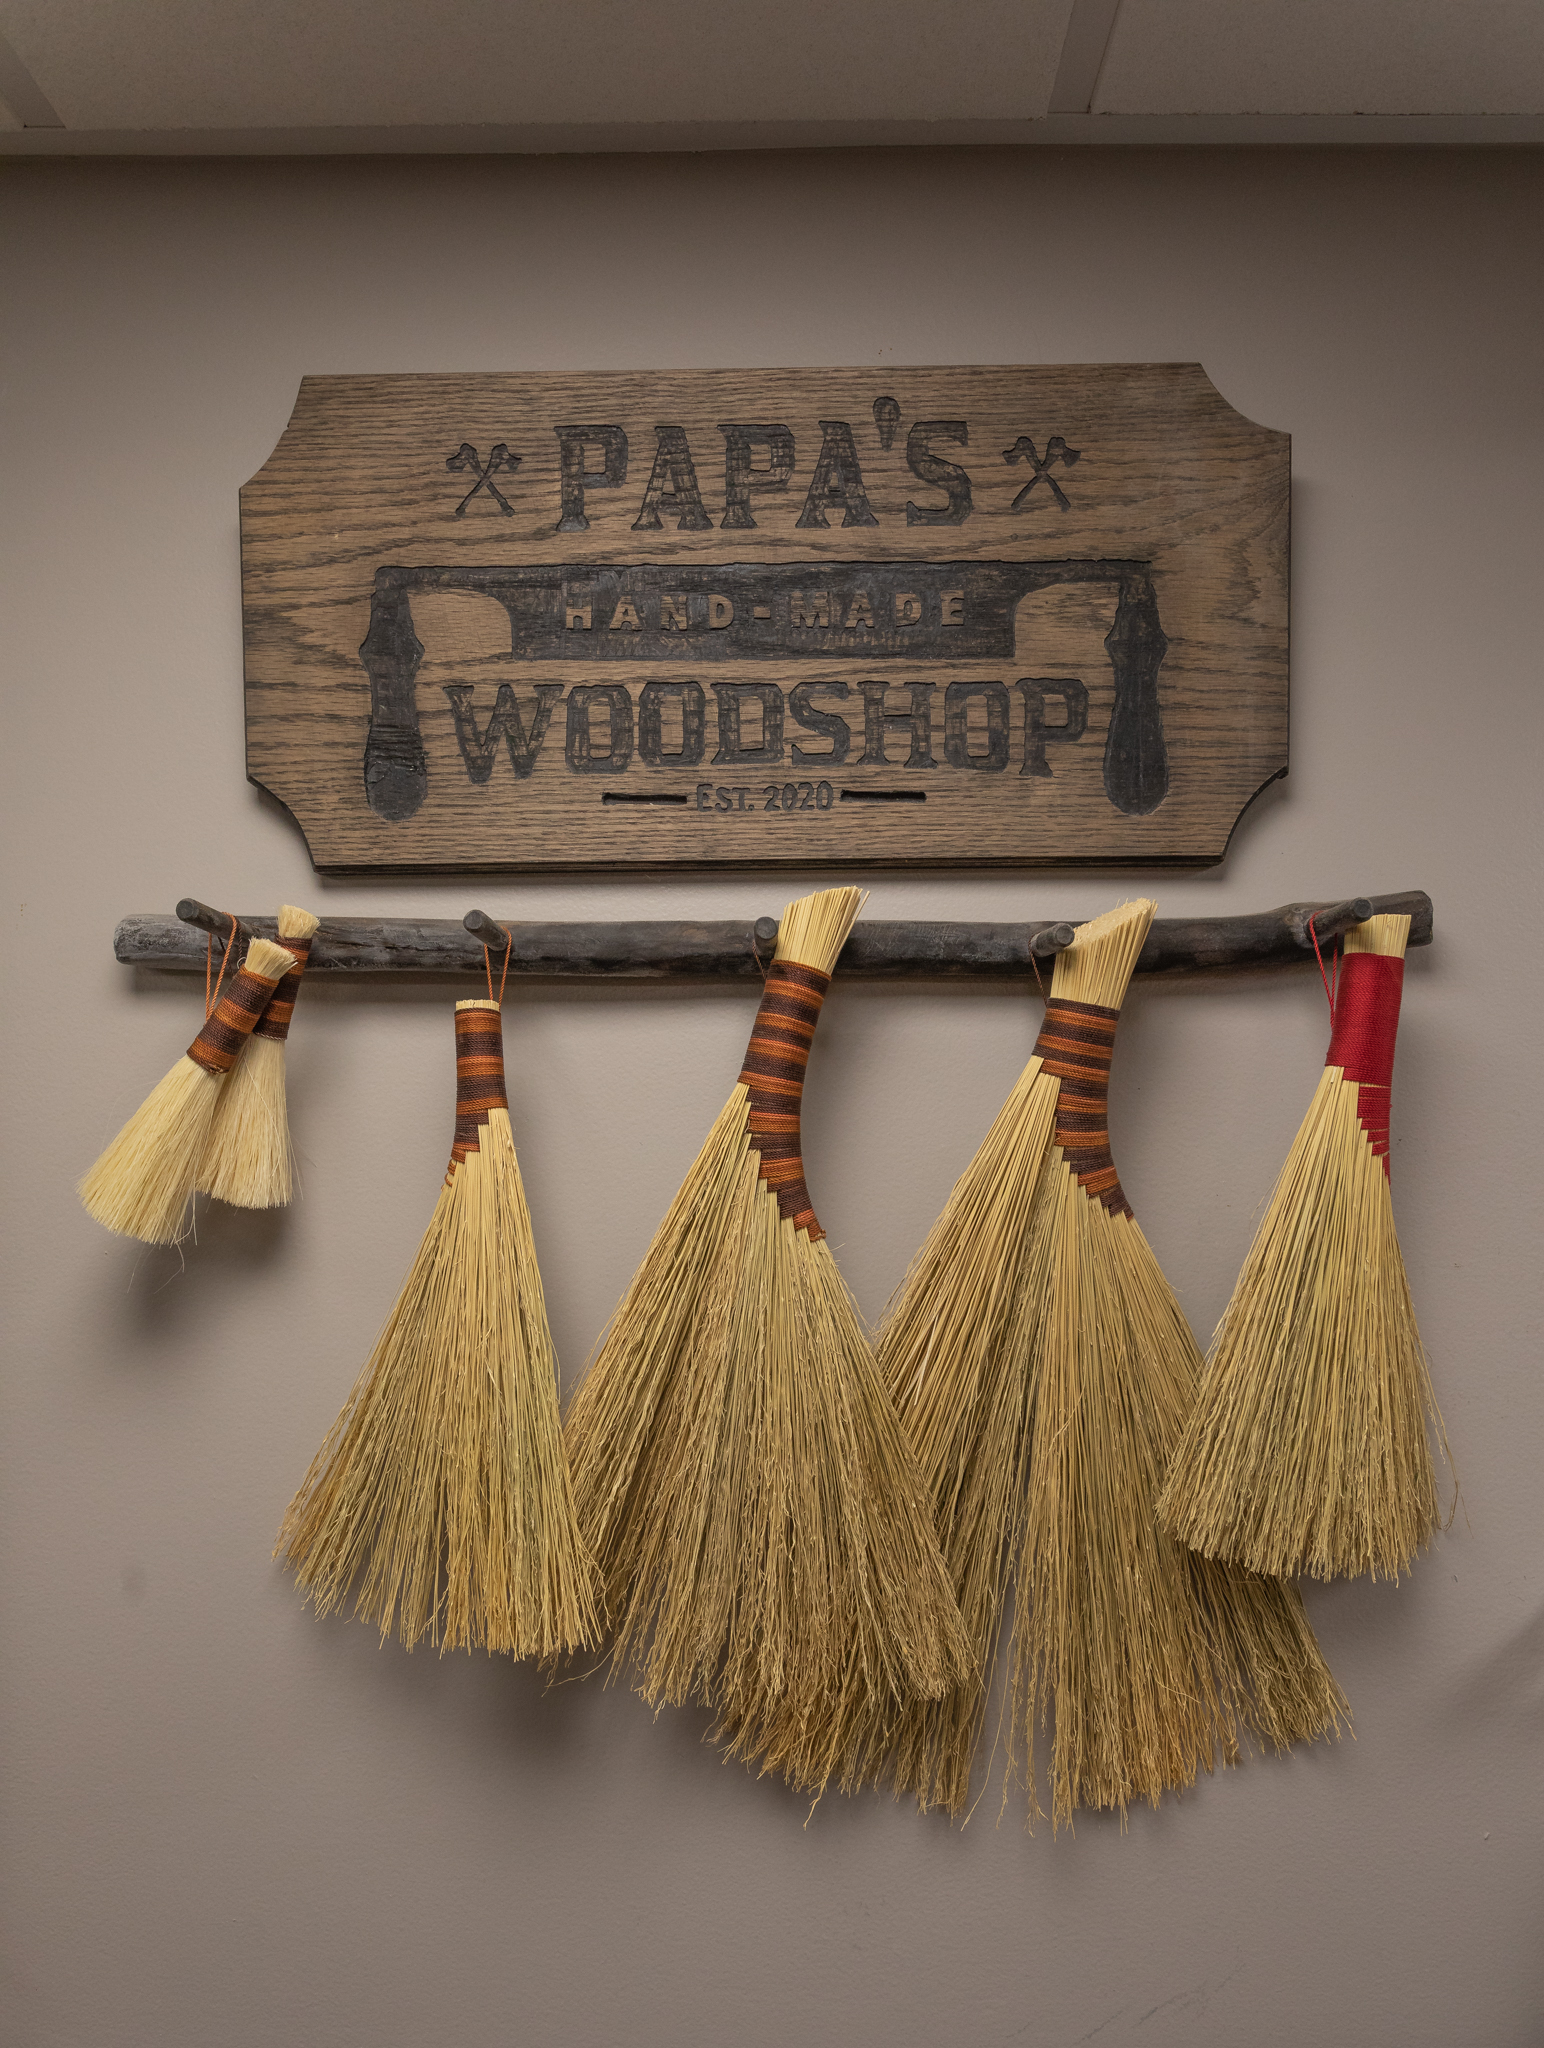 Papa's Handmade Woodshop, est. 2020